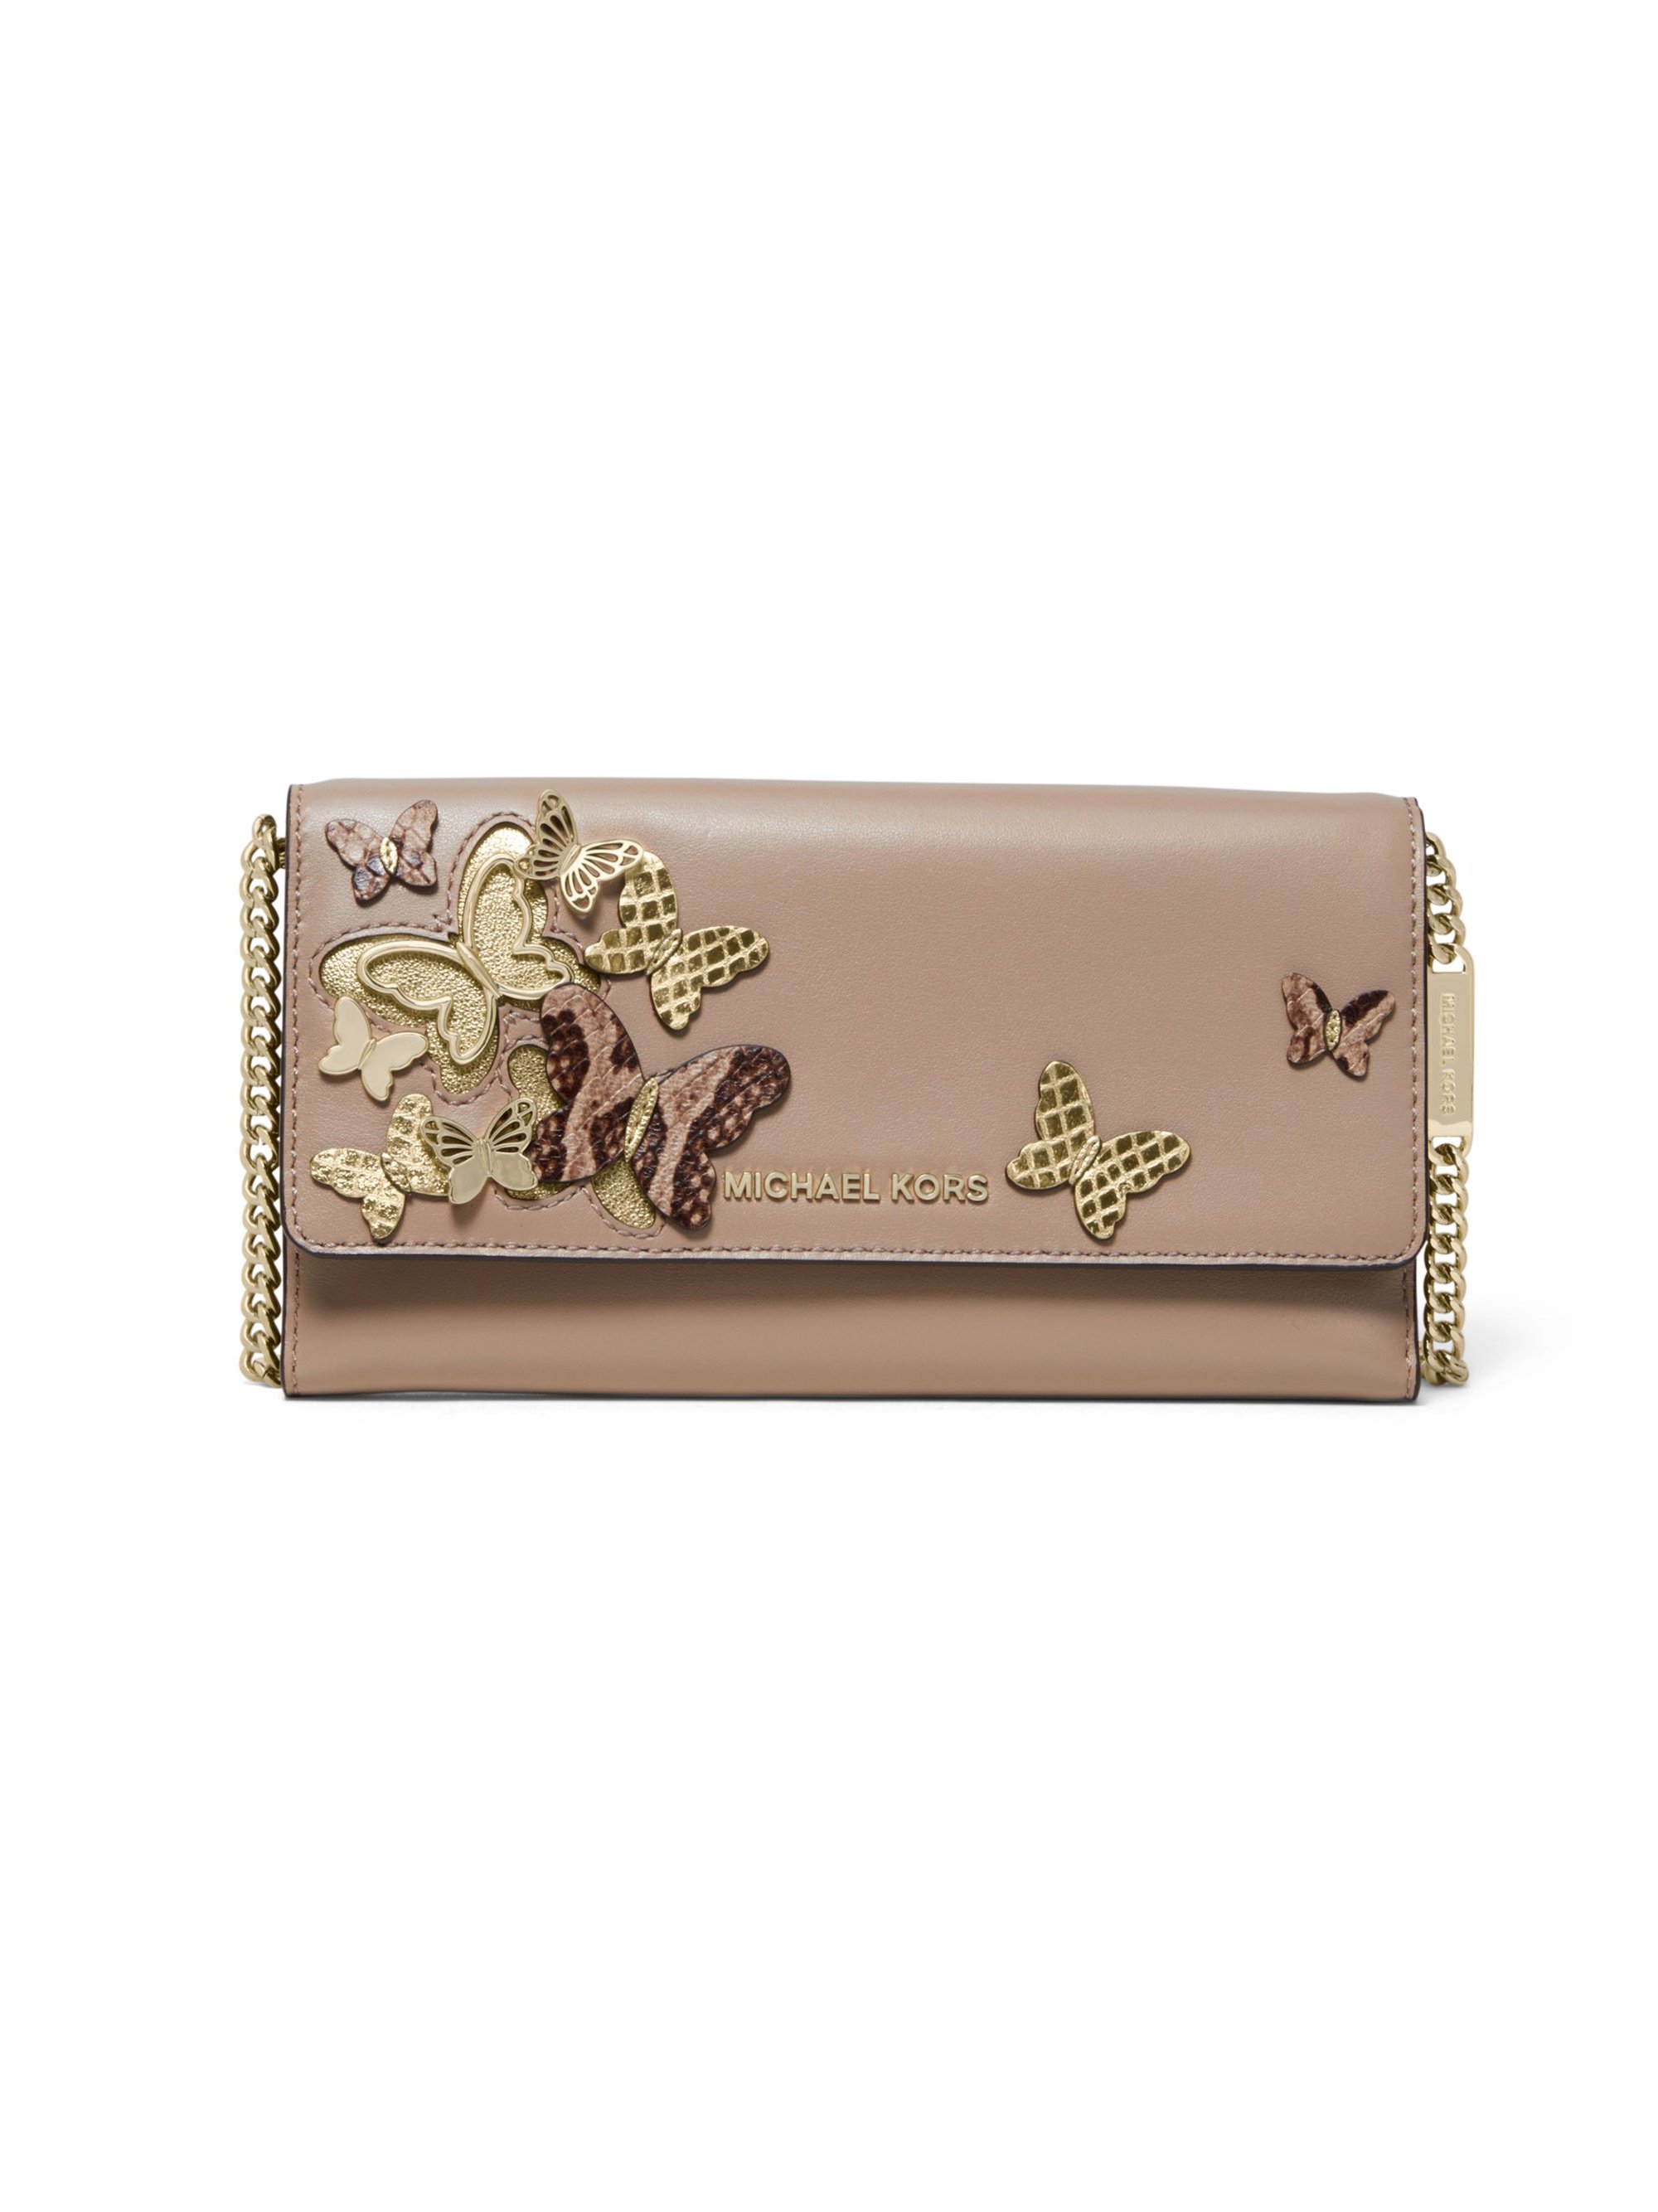 Women's leather handbag Michael Kors 